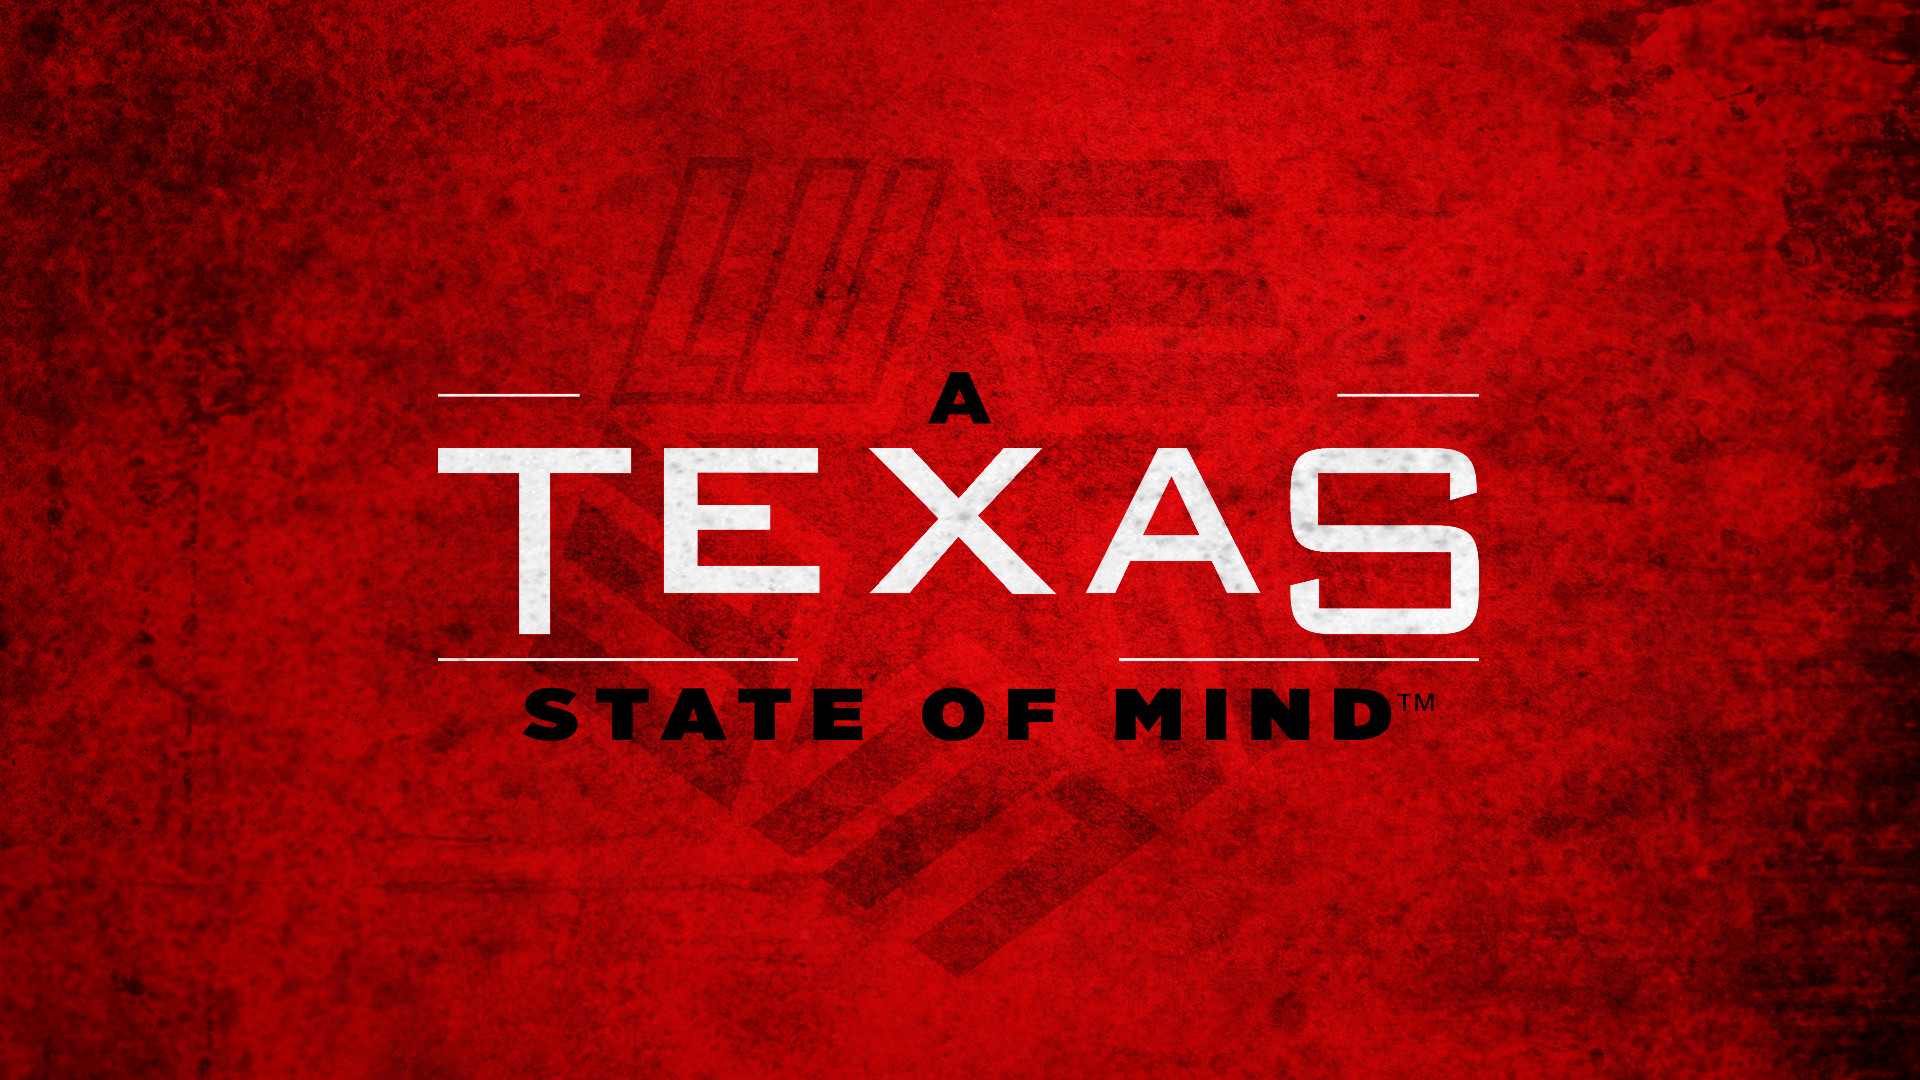 1920x1080 ... Texas State of Mind Logo 1920 x 1080 ...